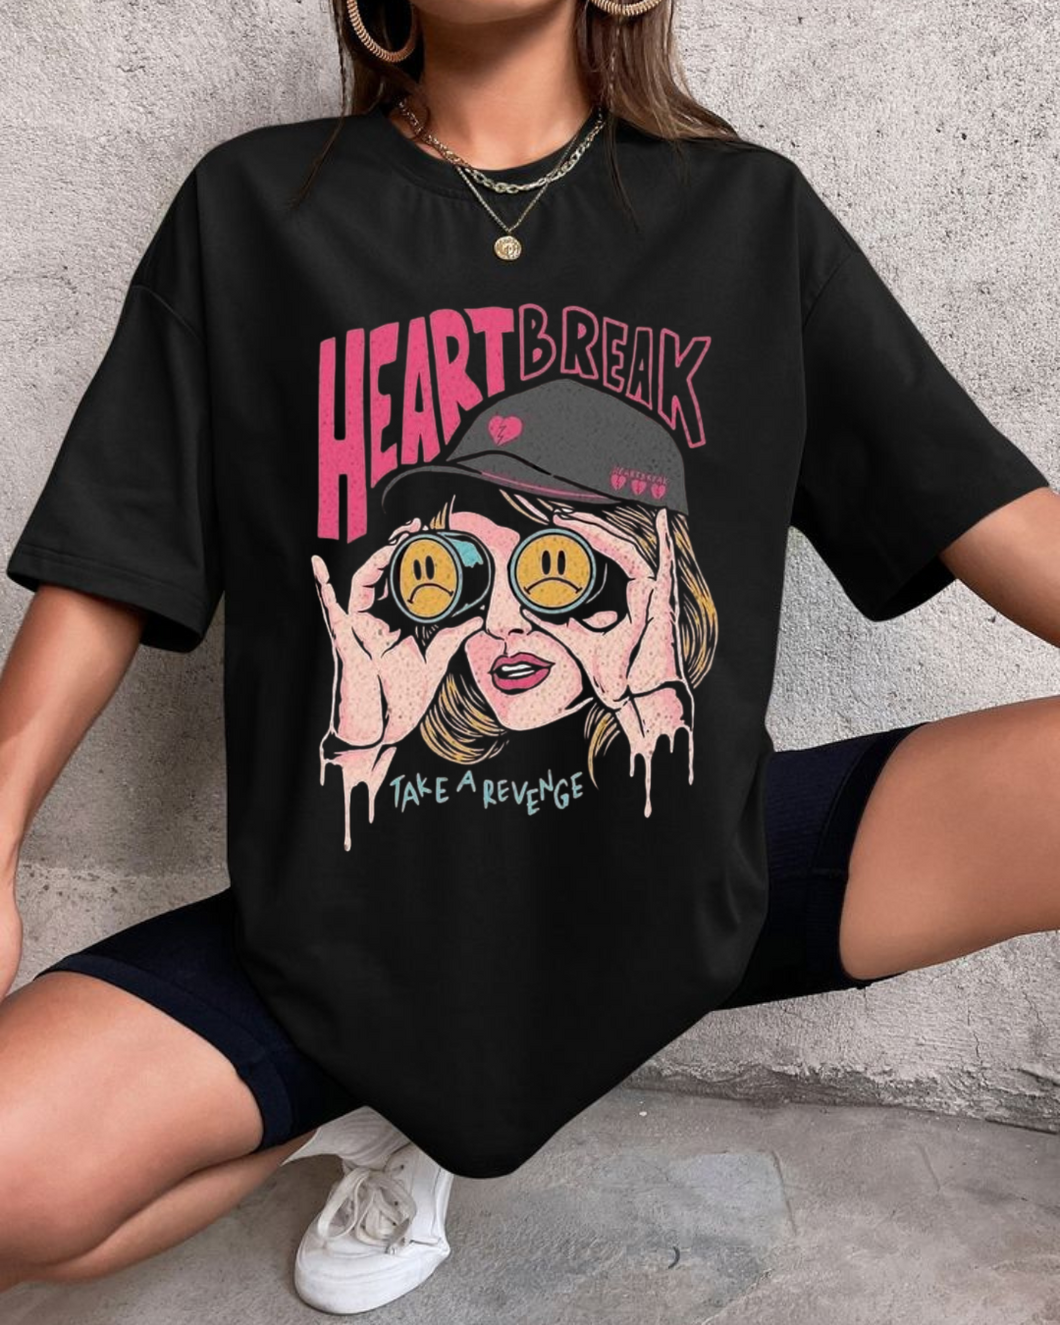 Women's Oversized Heart Break printed T-shirt